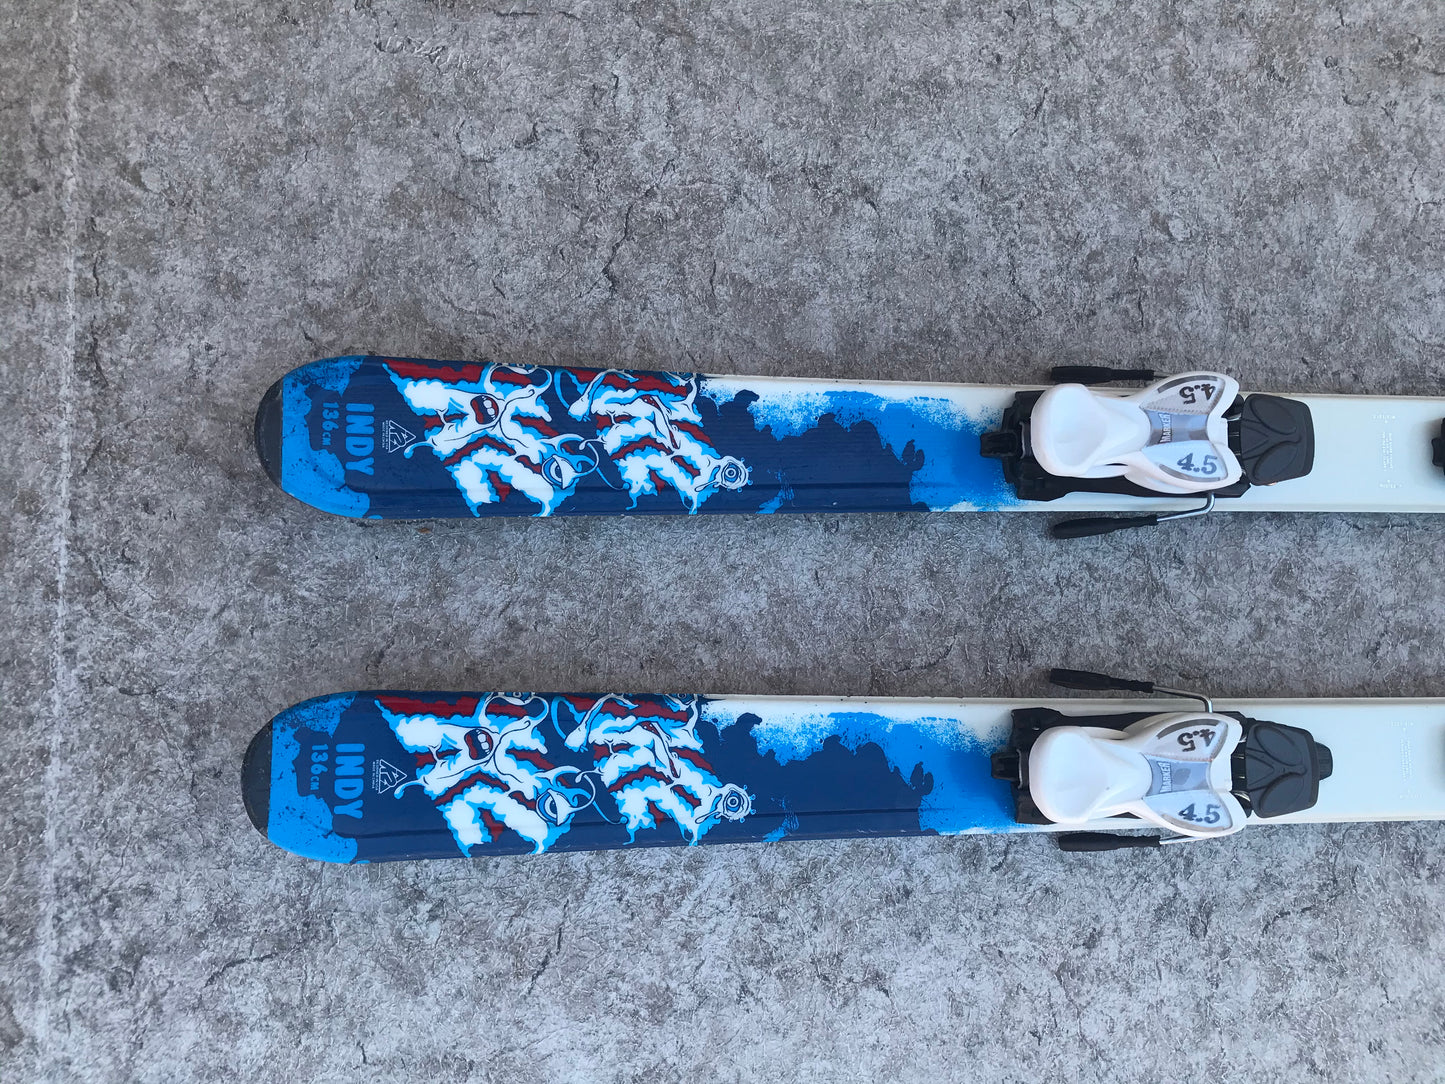 Ski 136 K-2 Indy Blue White Parabolic With Bindings